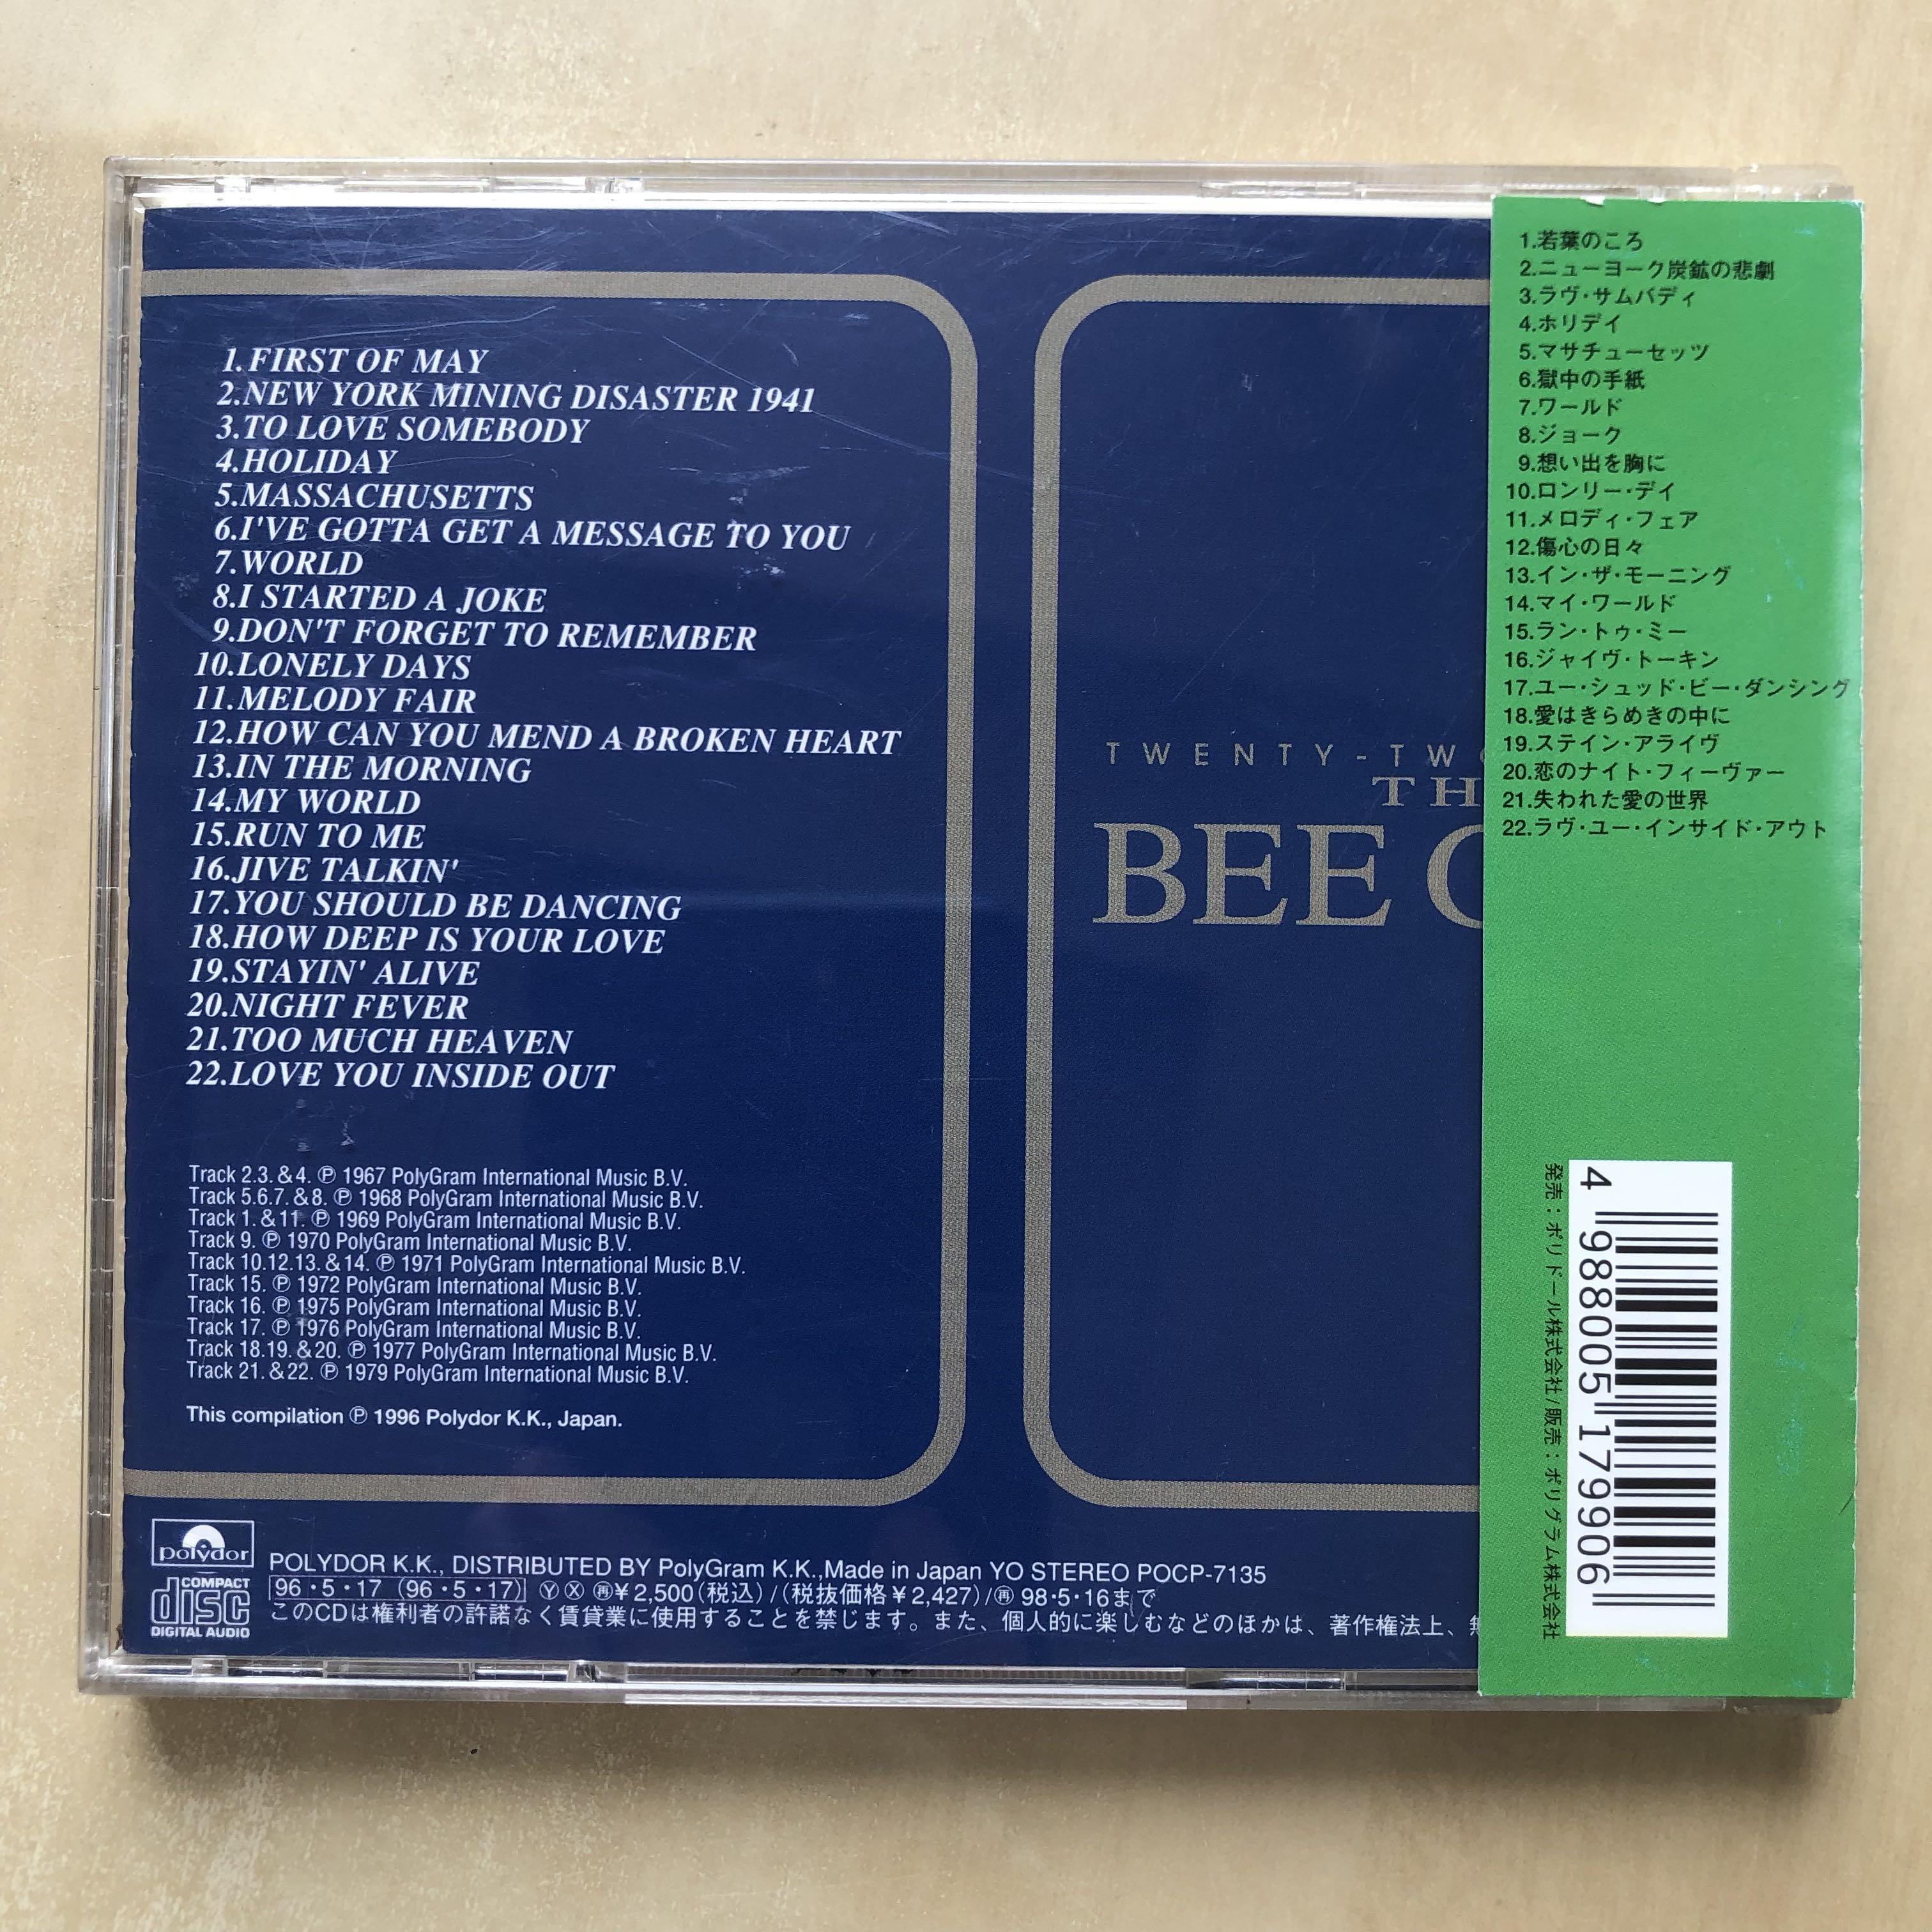 CD丨Twenty-two Hits